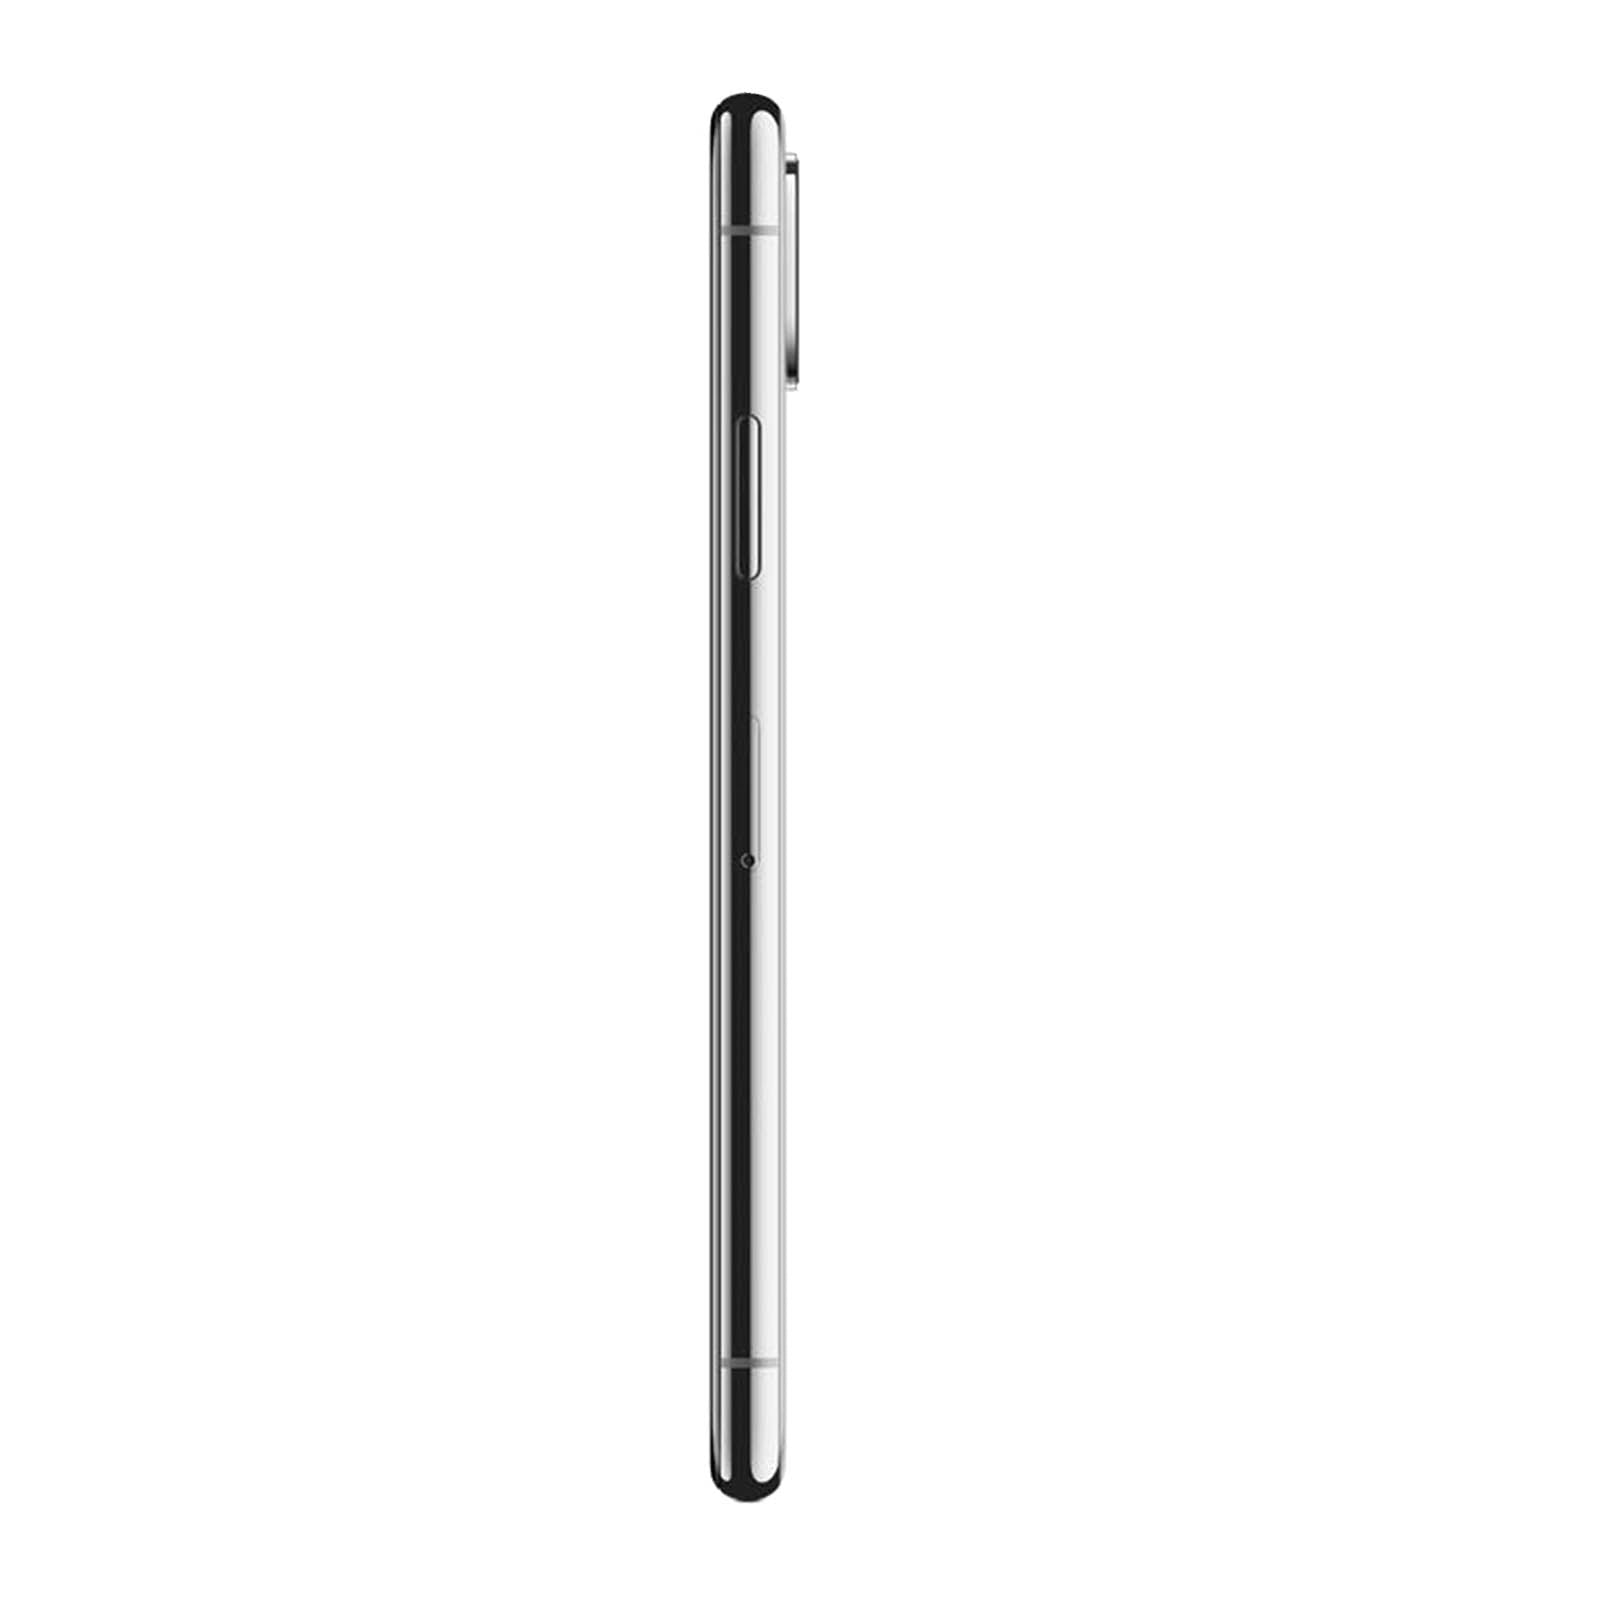 Apple iPhone XS Max 512GB Silver Very Good - Unlocked